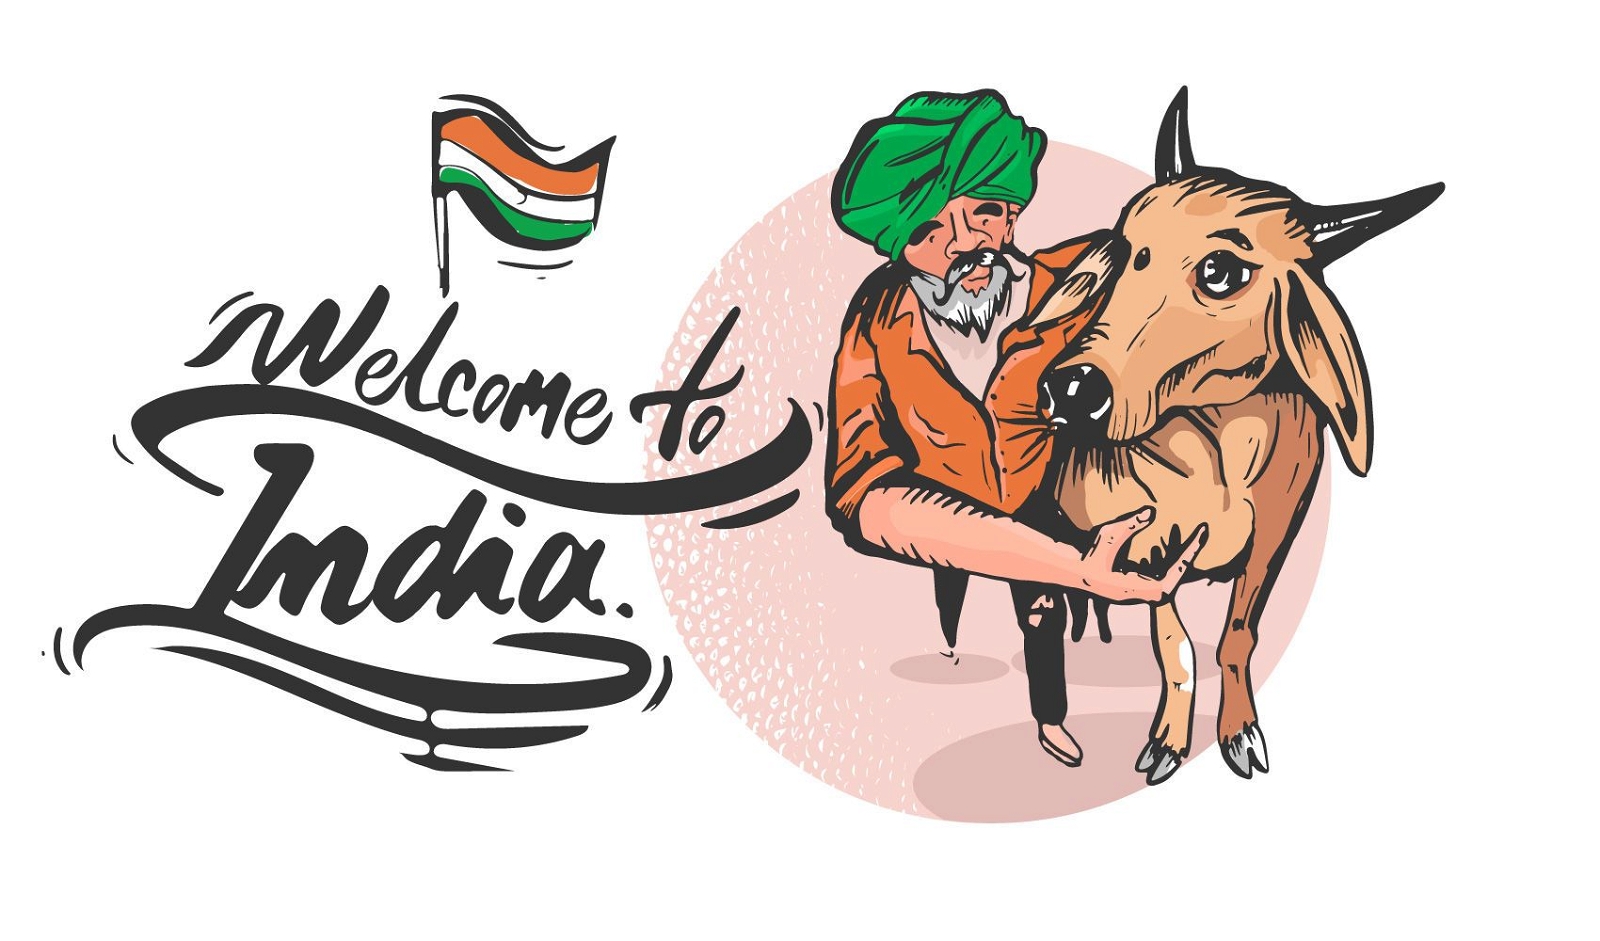 Bienvenido a India Banner Design